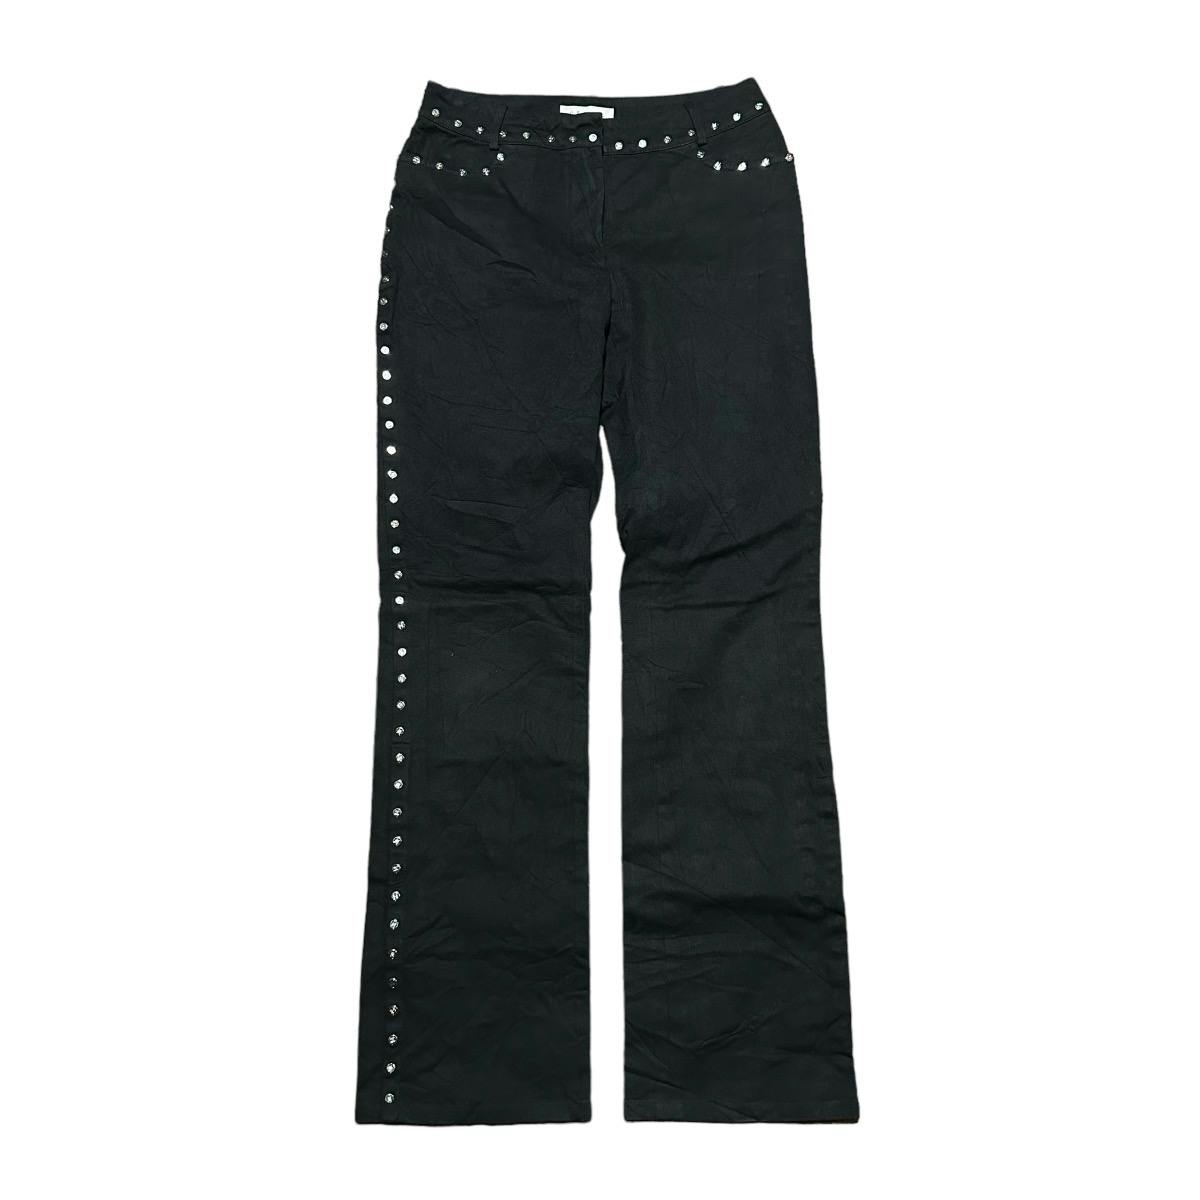 Studded Black Denim Pants - 2